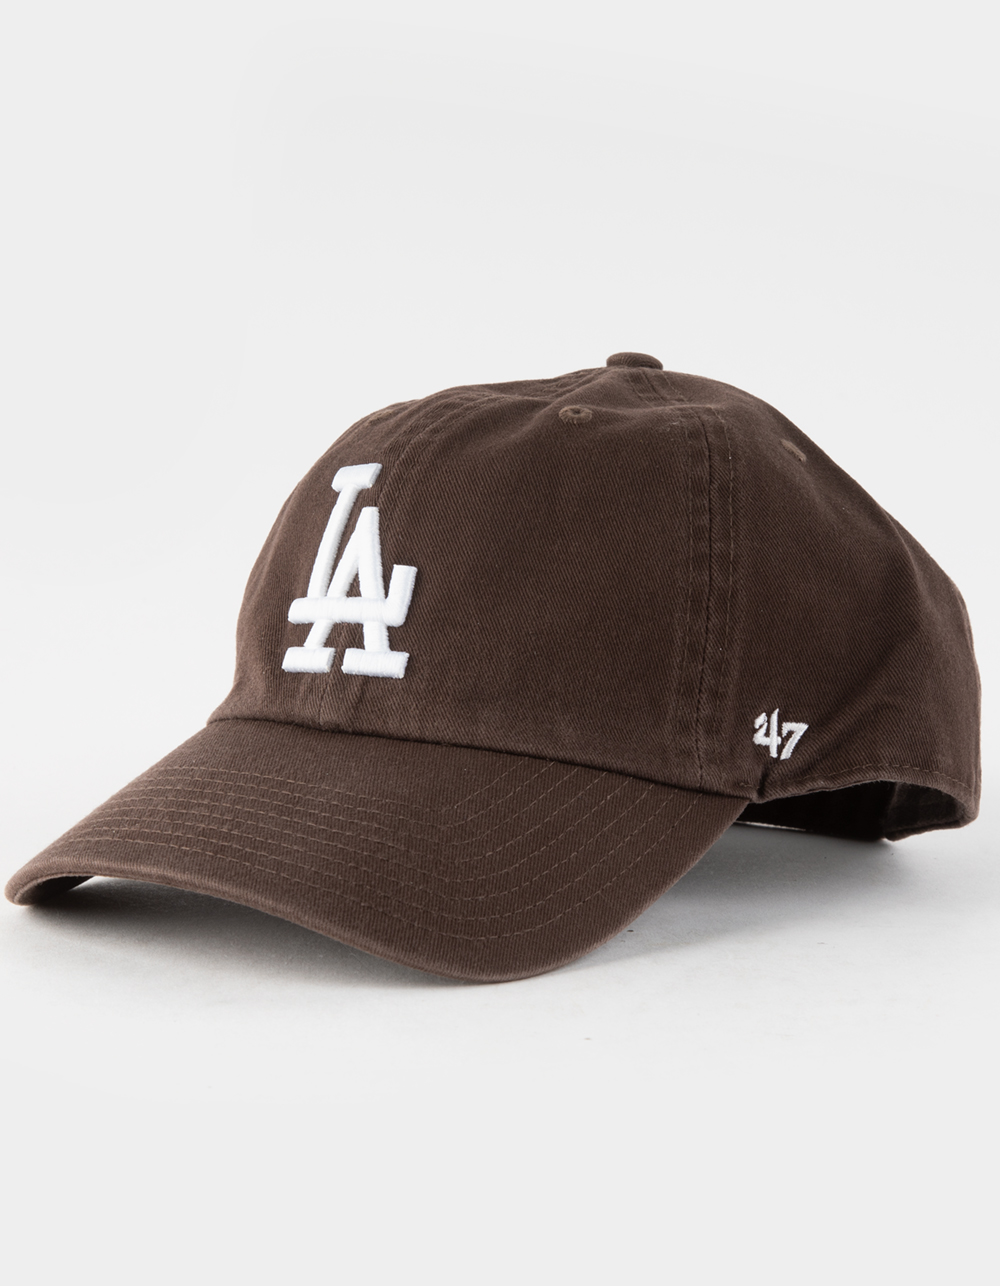 Brown Dodger Hat Cap City Hat for Sale in Lynwood, CA - OfferUp